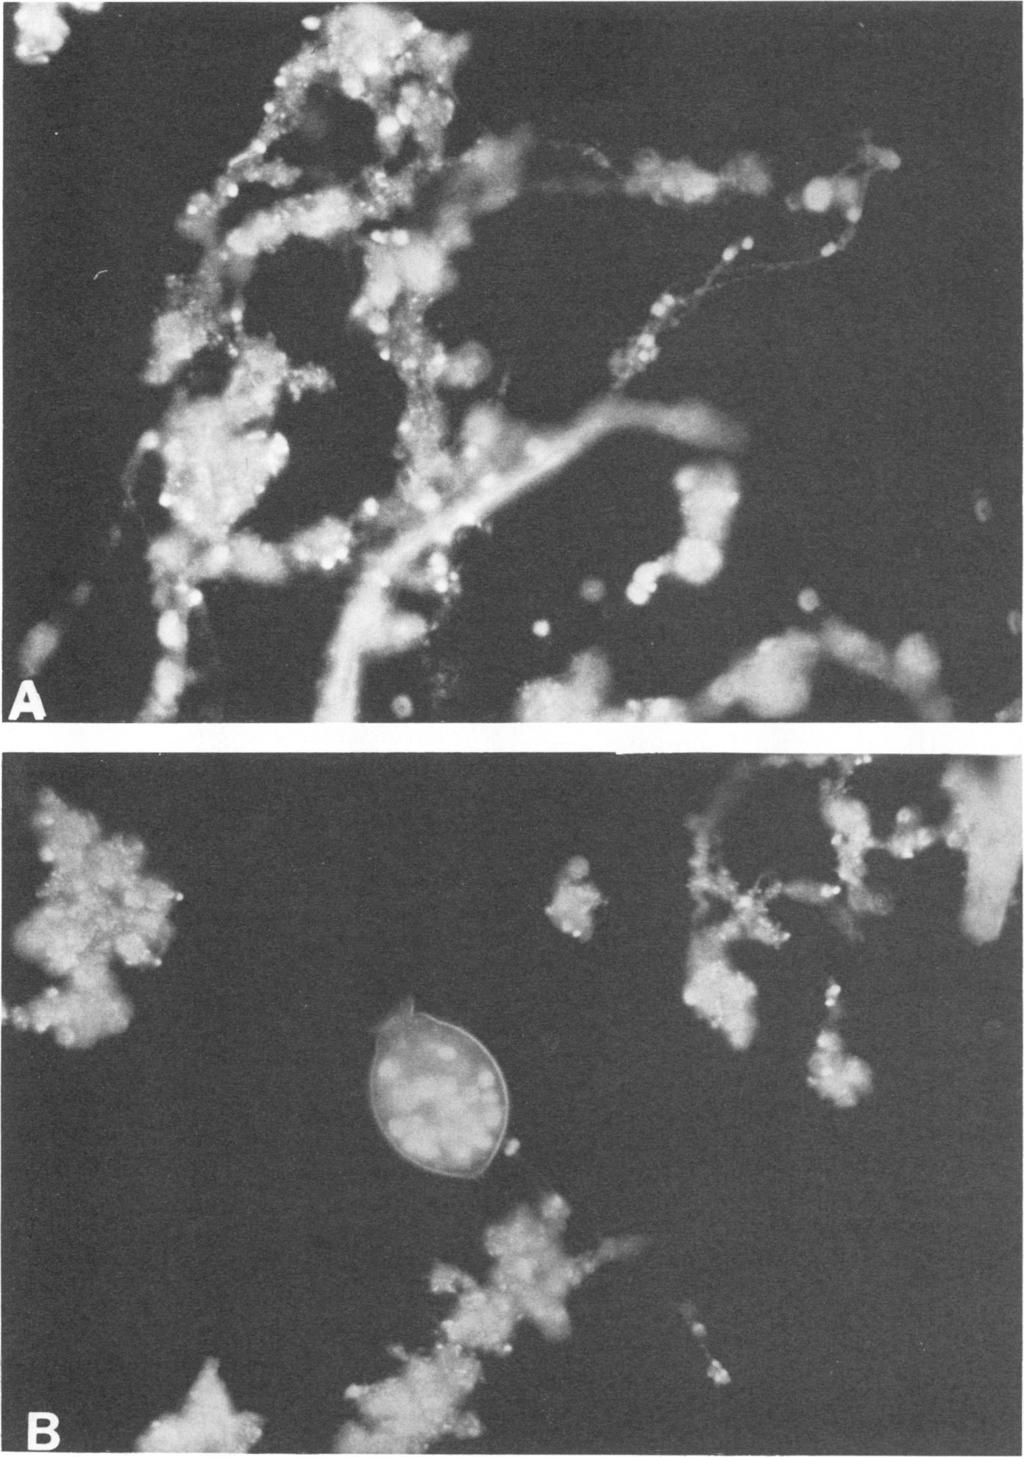 318 VAN DER DRIFT ET AL. APPL. ENVIRON. MICROBIOL. FIG. 3. Predation ofprotozoa on bacteria adsorbed on sludge flocs demonstrated by fluorescence photomicroscopy.